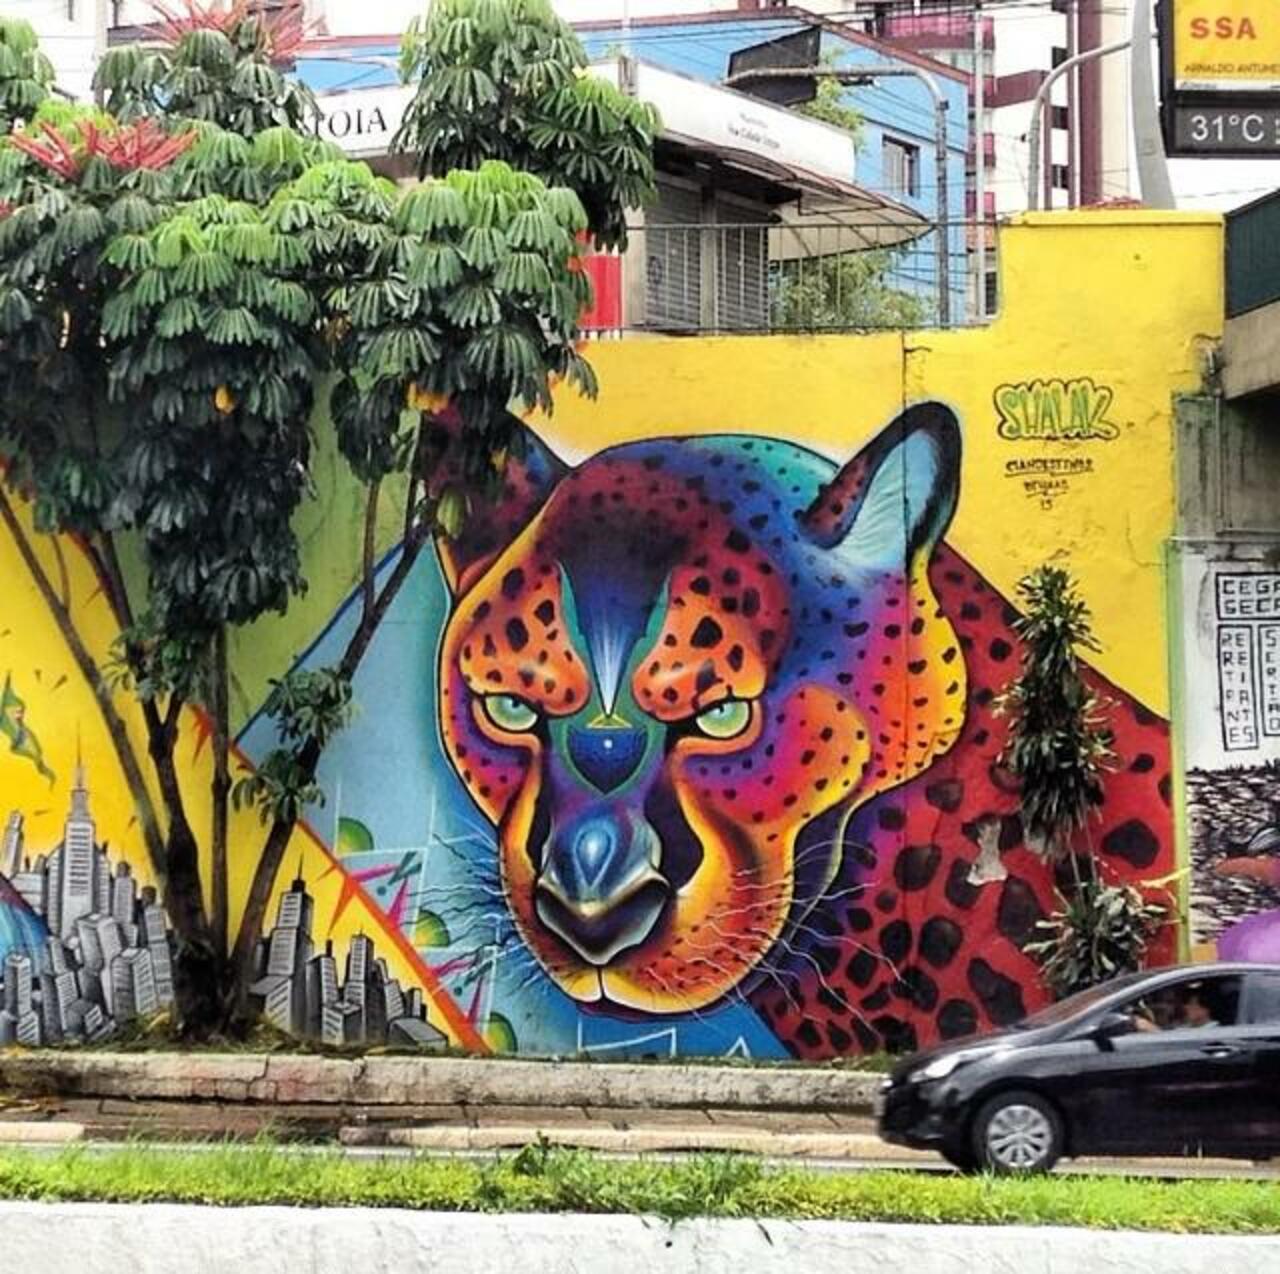 Artist ShalakAttack beautiful & colourful nature in Street Art piece in São Paulo 

#art #graffiti #mural #streetart http://t.co/fO5GJI0Pkc